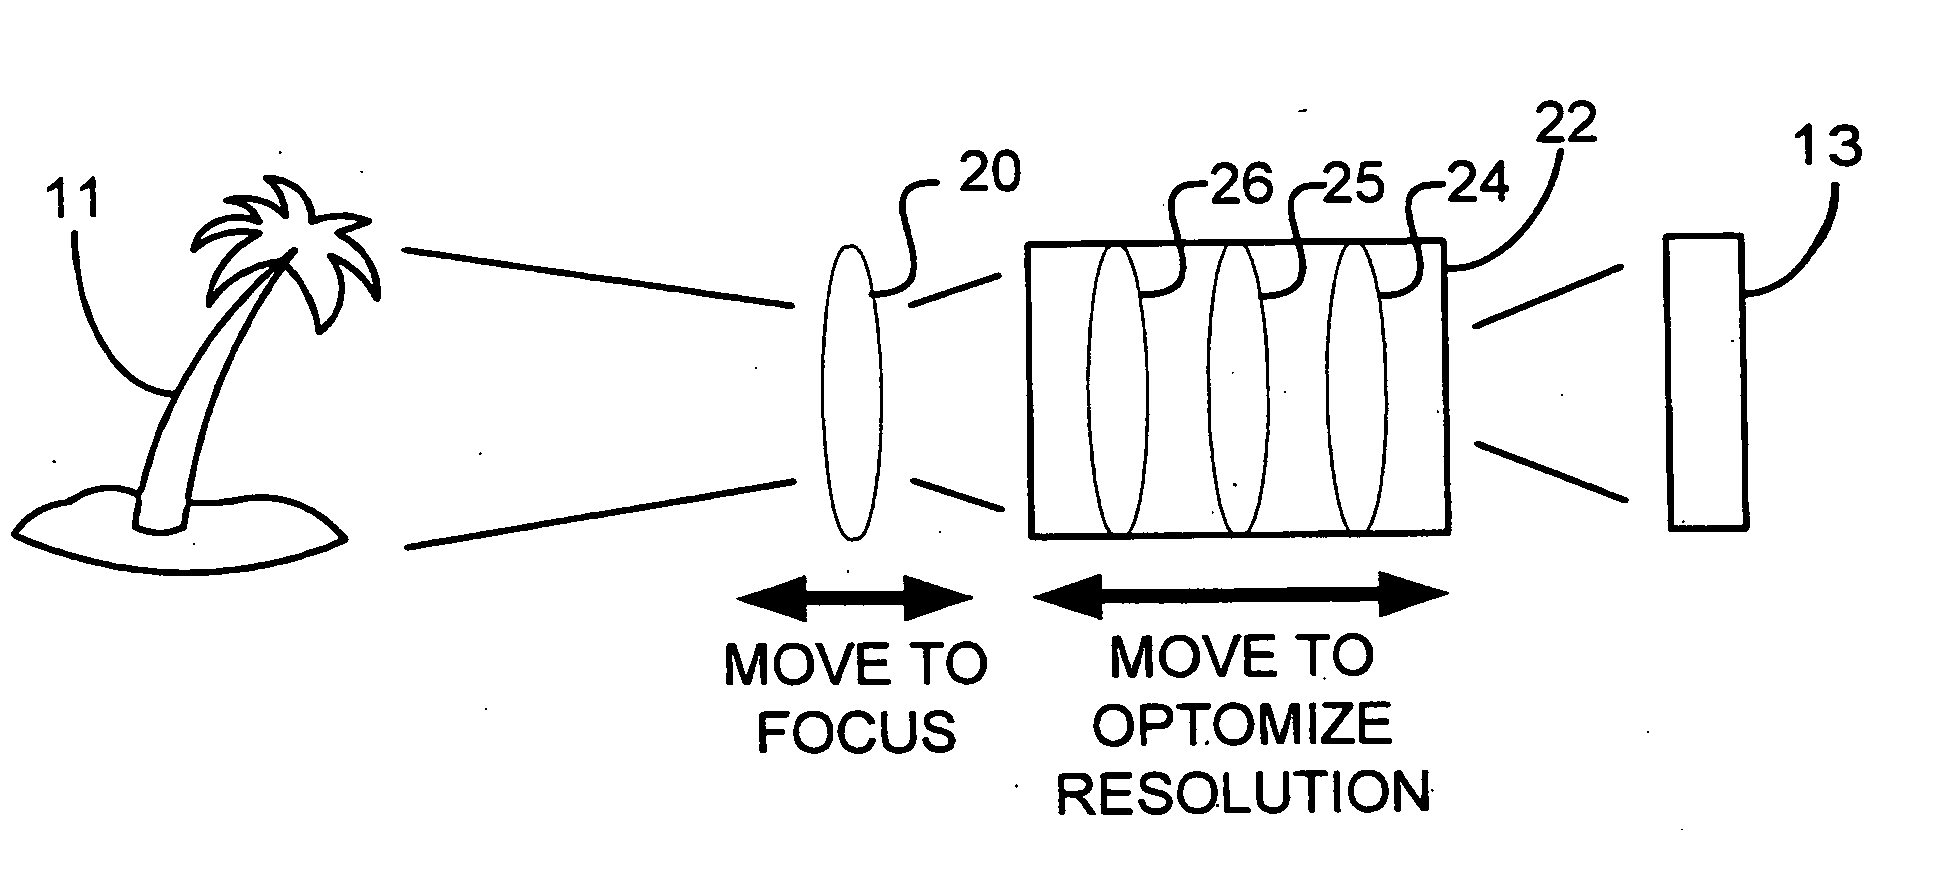 Resolution adjustment for miniature camera